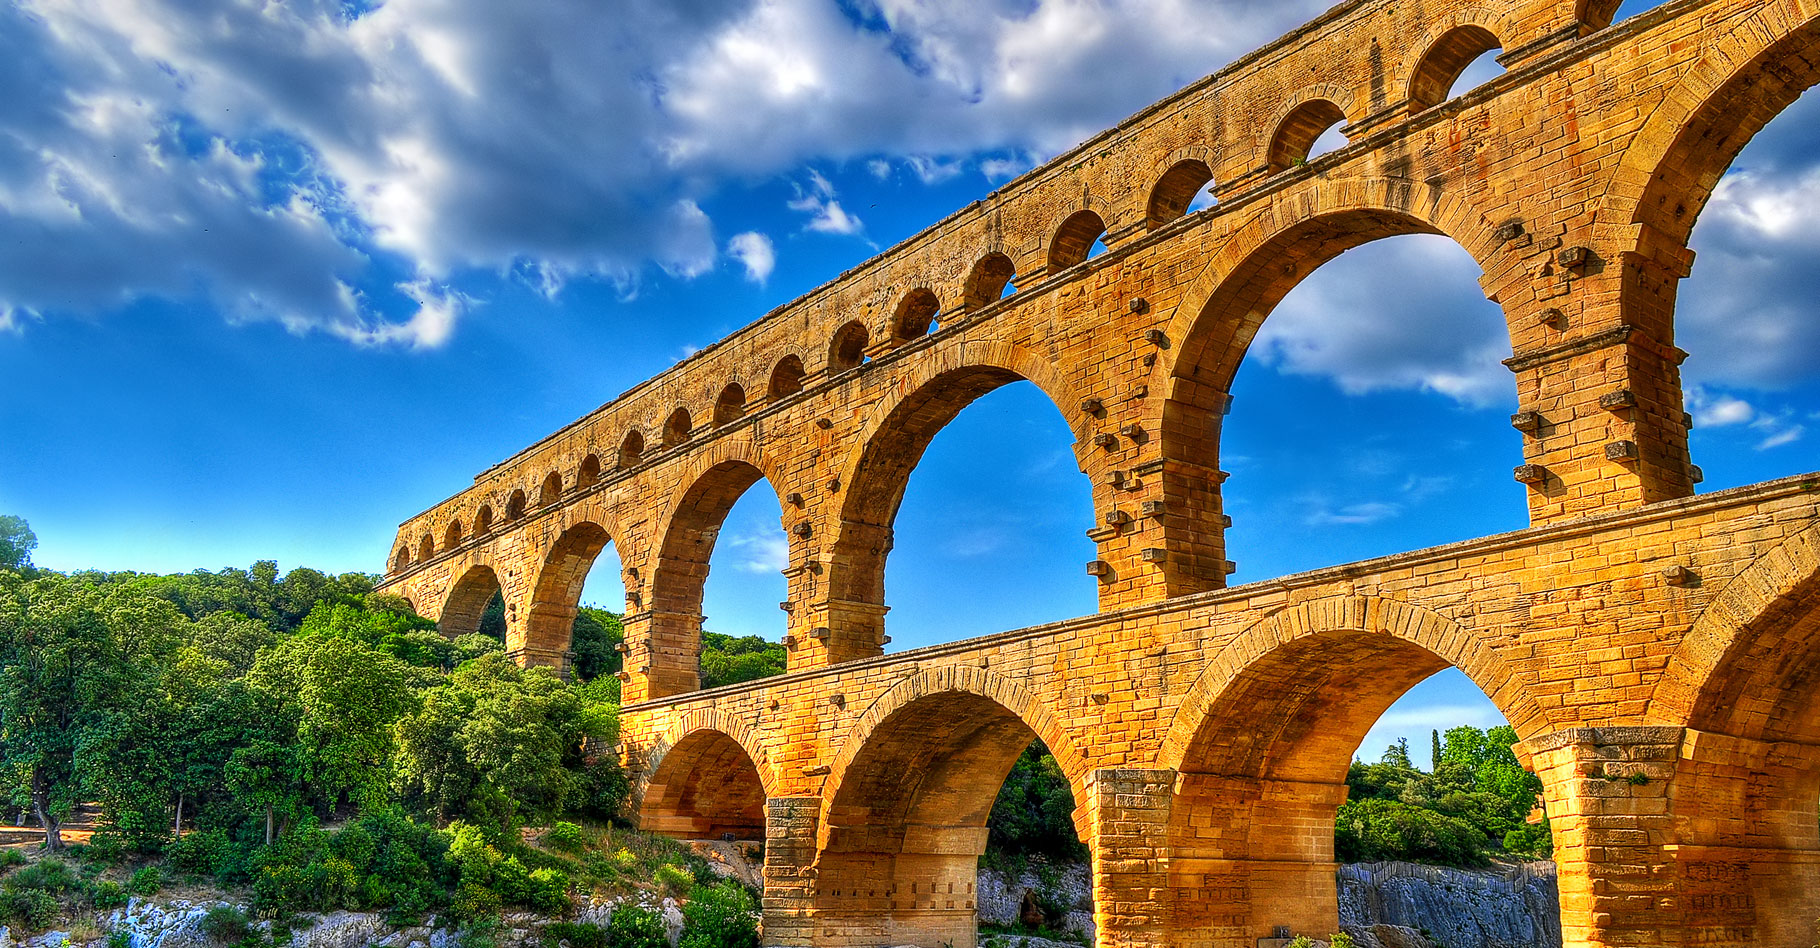 Le pont du Gard. © Nicolas Bicome, Wikimedia commons, CC by-nc 3.0